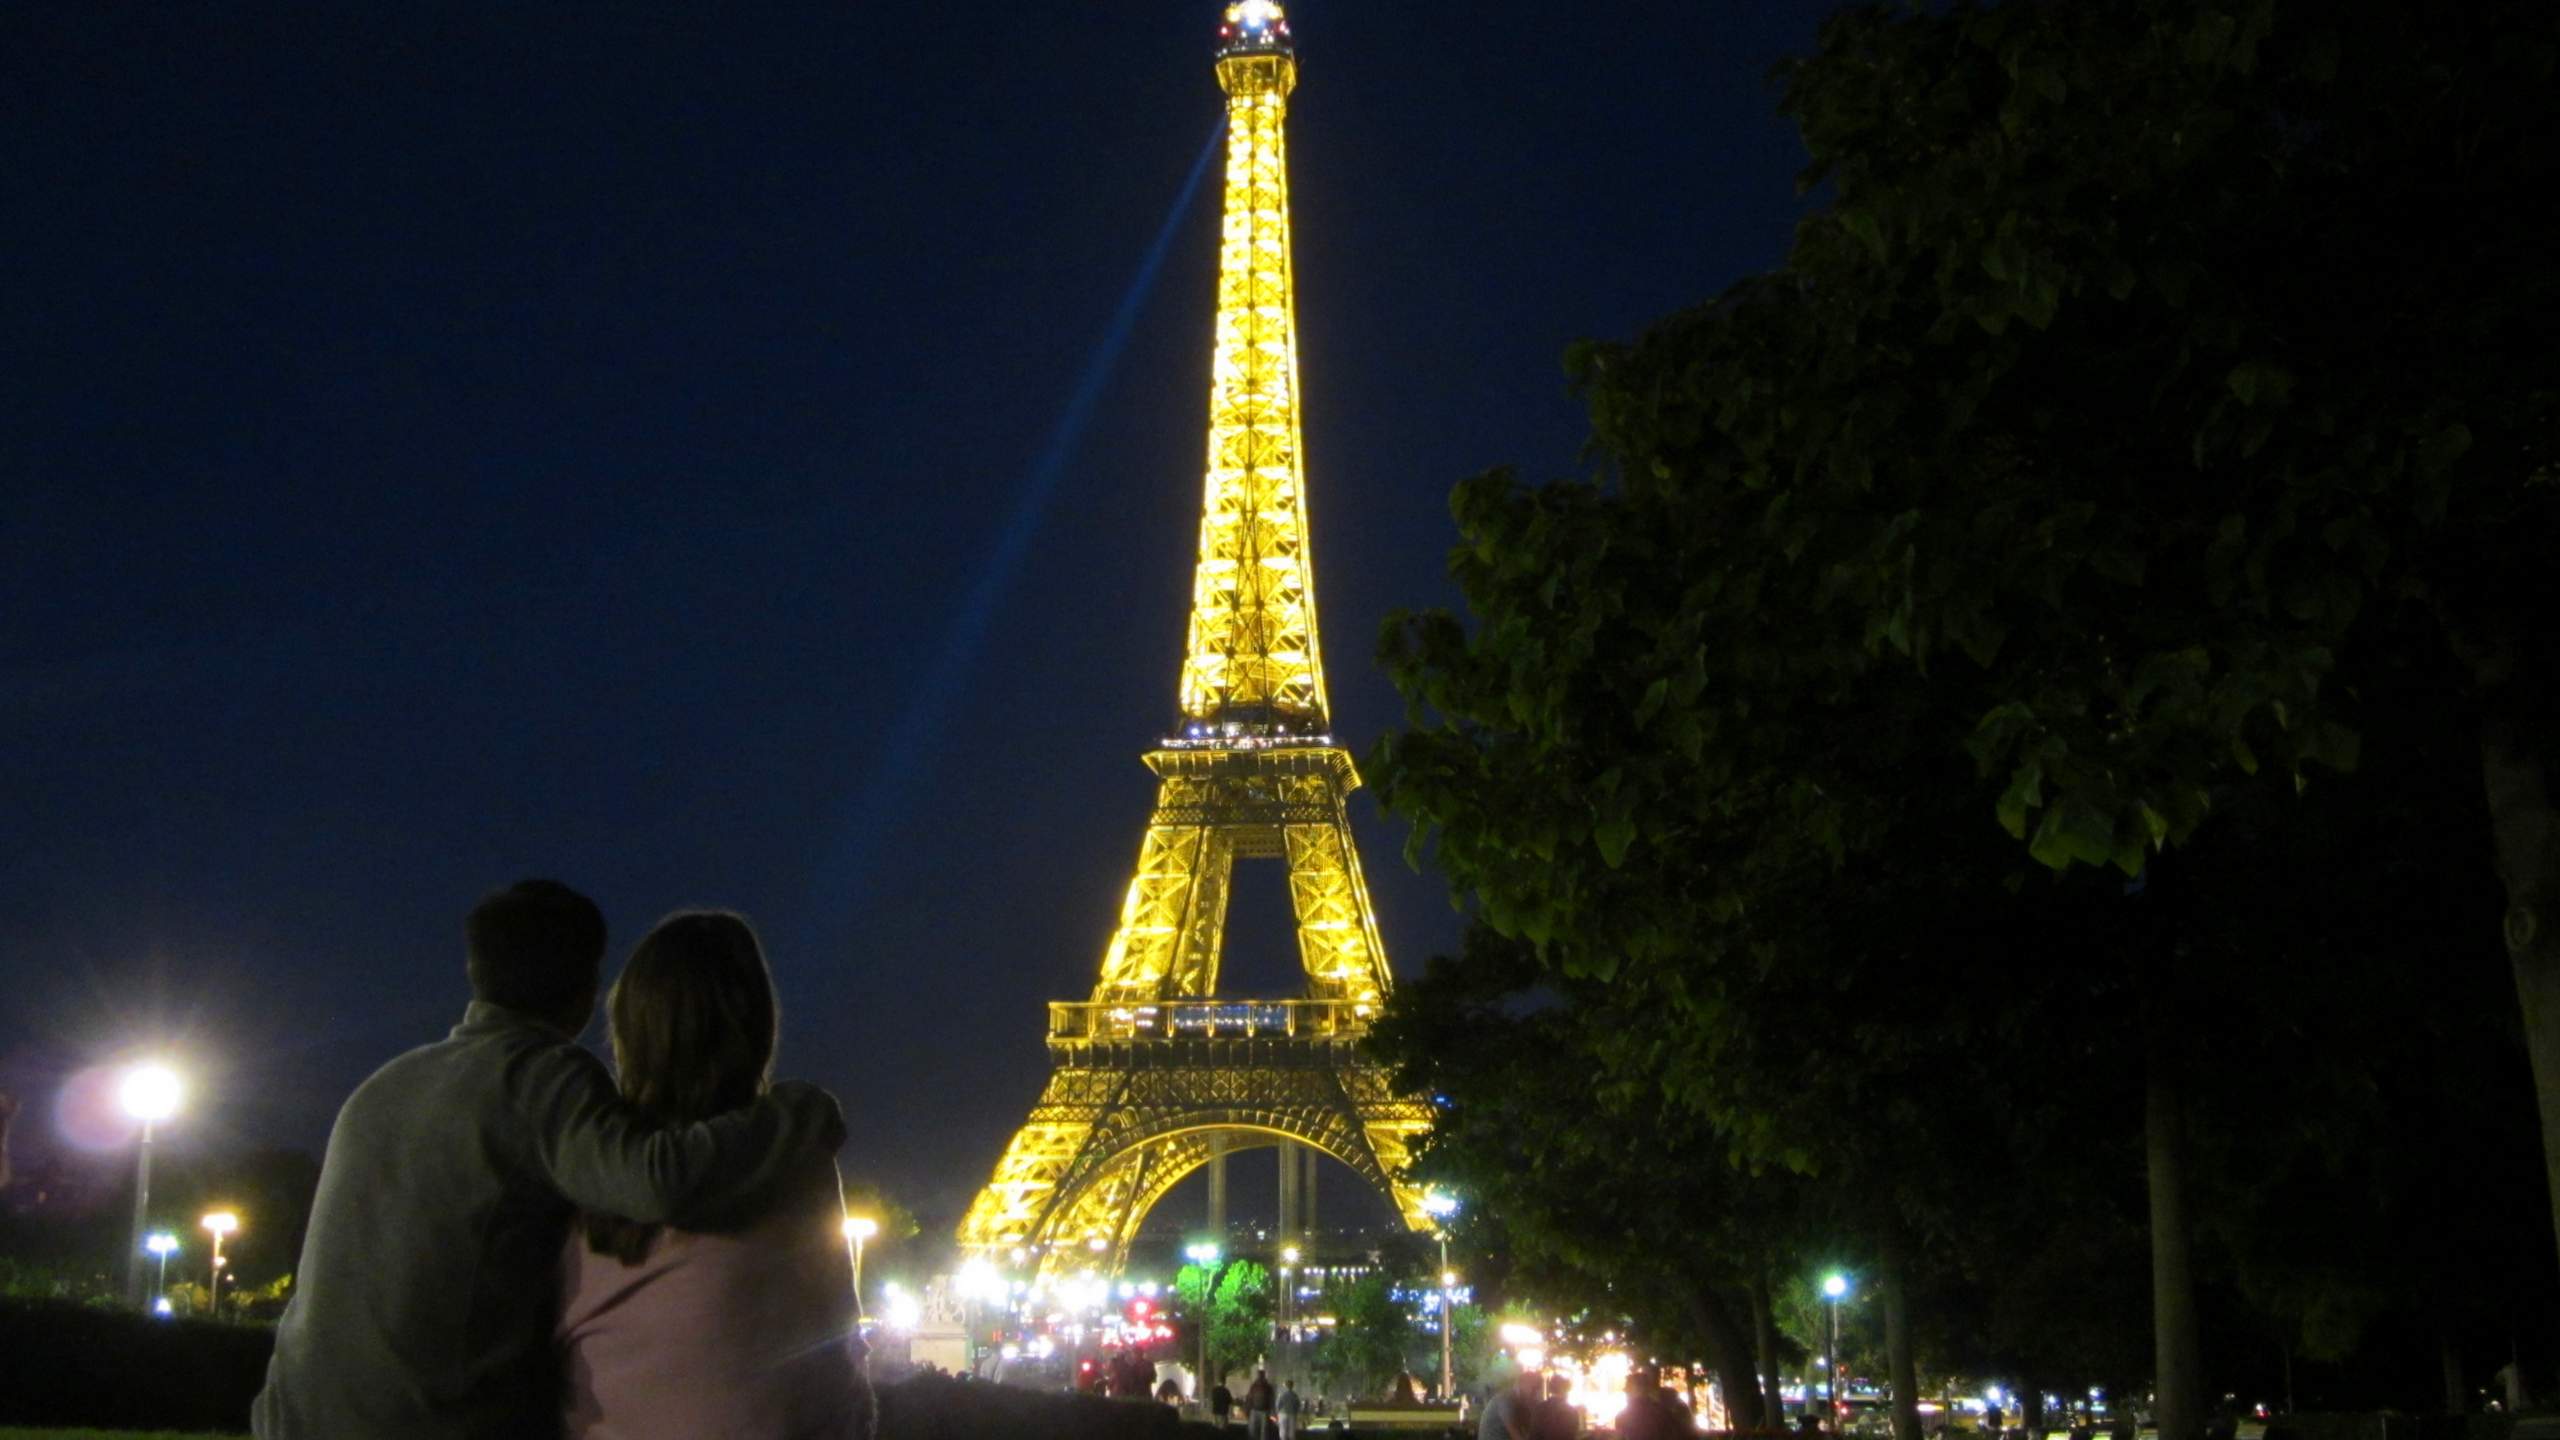 Enjoying the view of the Eiffel Tower on Katia's birthday.